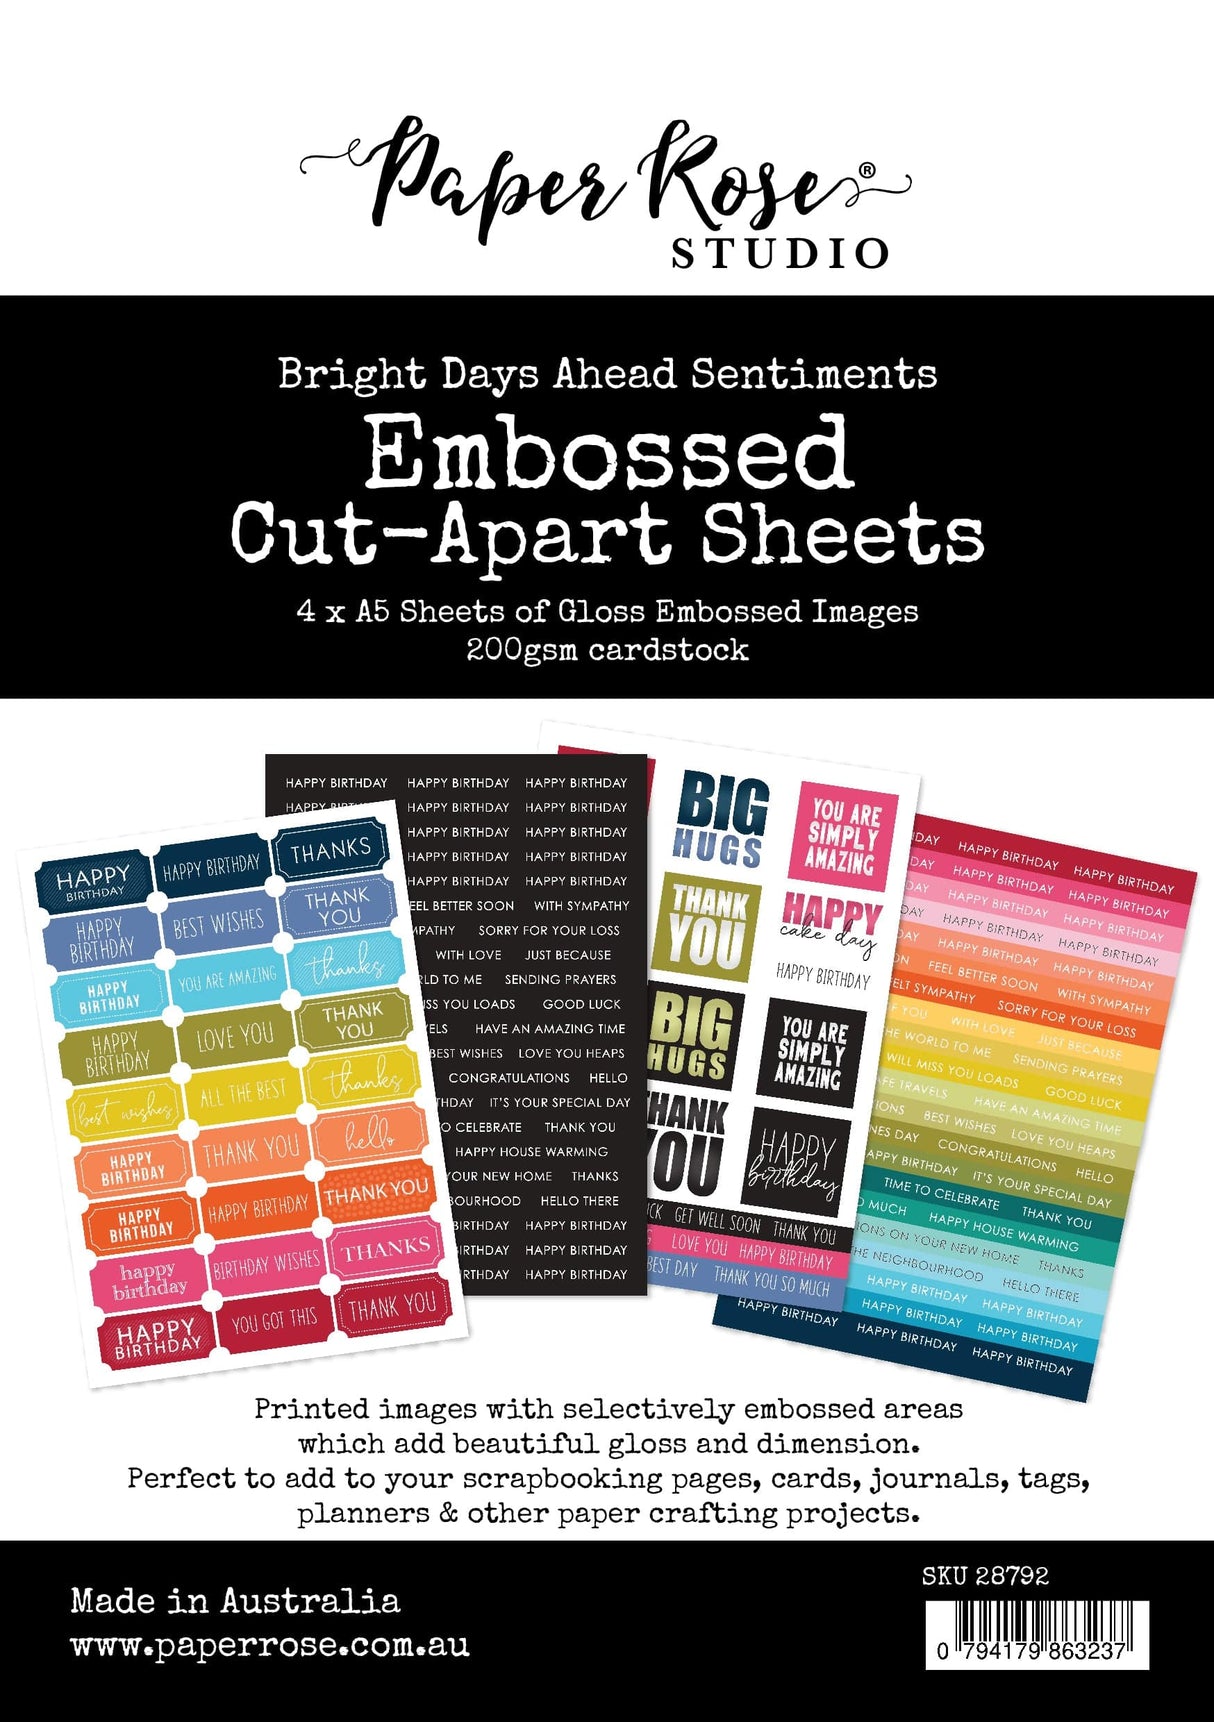 Bright Days Ahead Embossed Cut-Apart Sheets 28792 - Paper Rose Studio